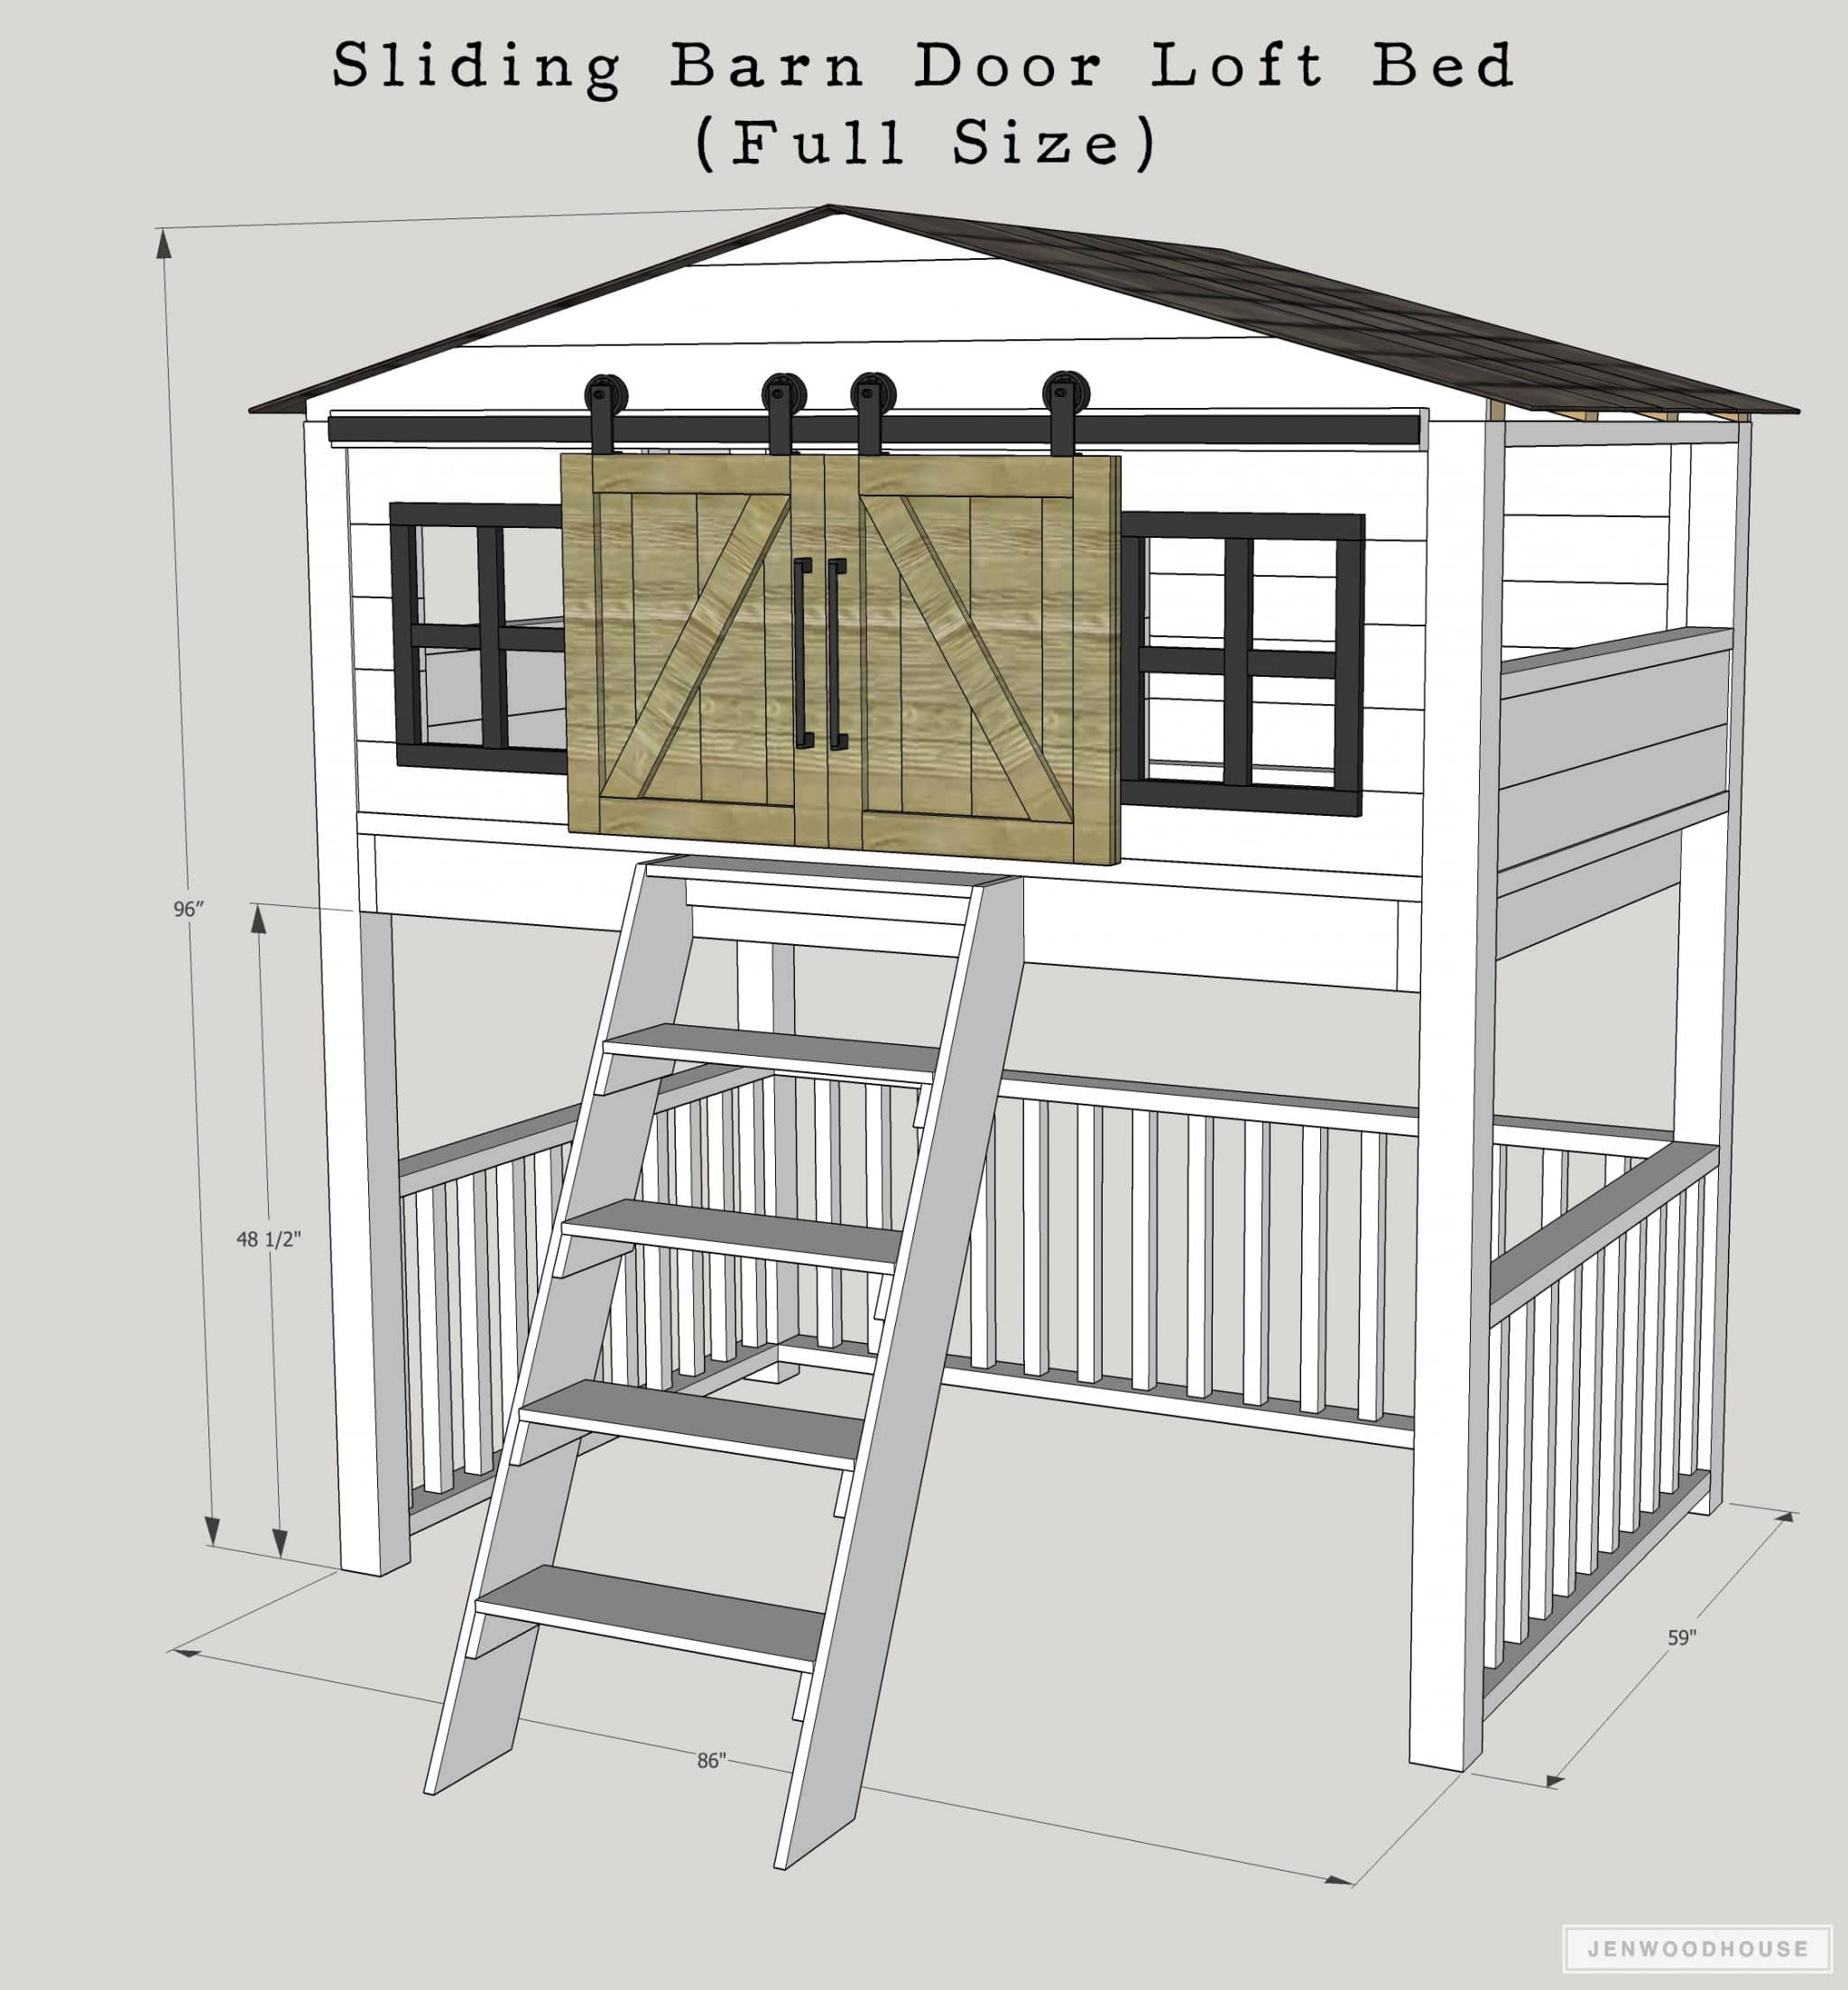 Build A Diy Sliding Barn Door Loft Bed, How Do You Make A Full Size Loft Bed